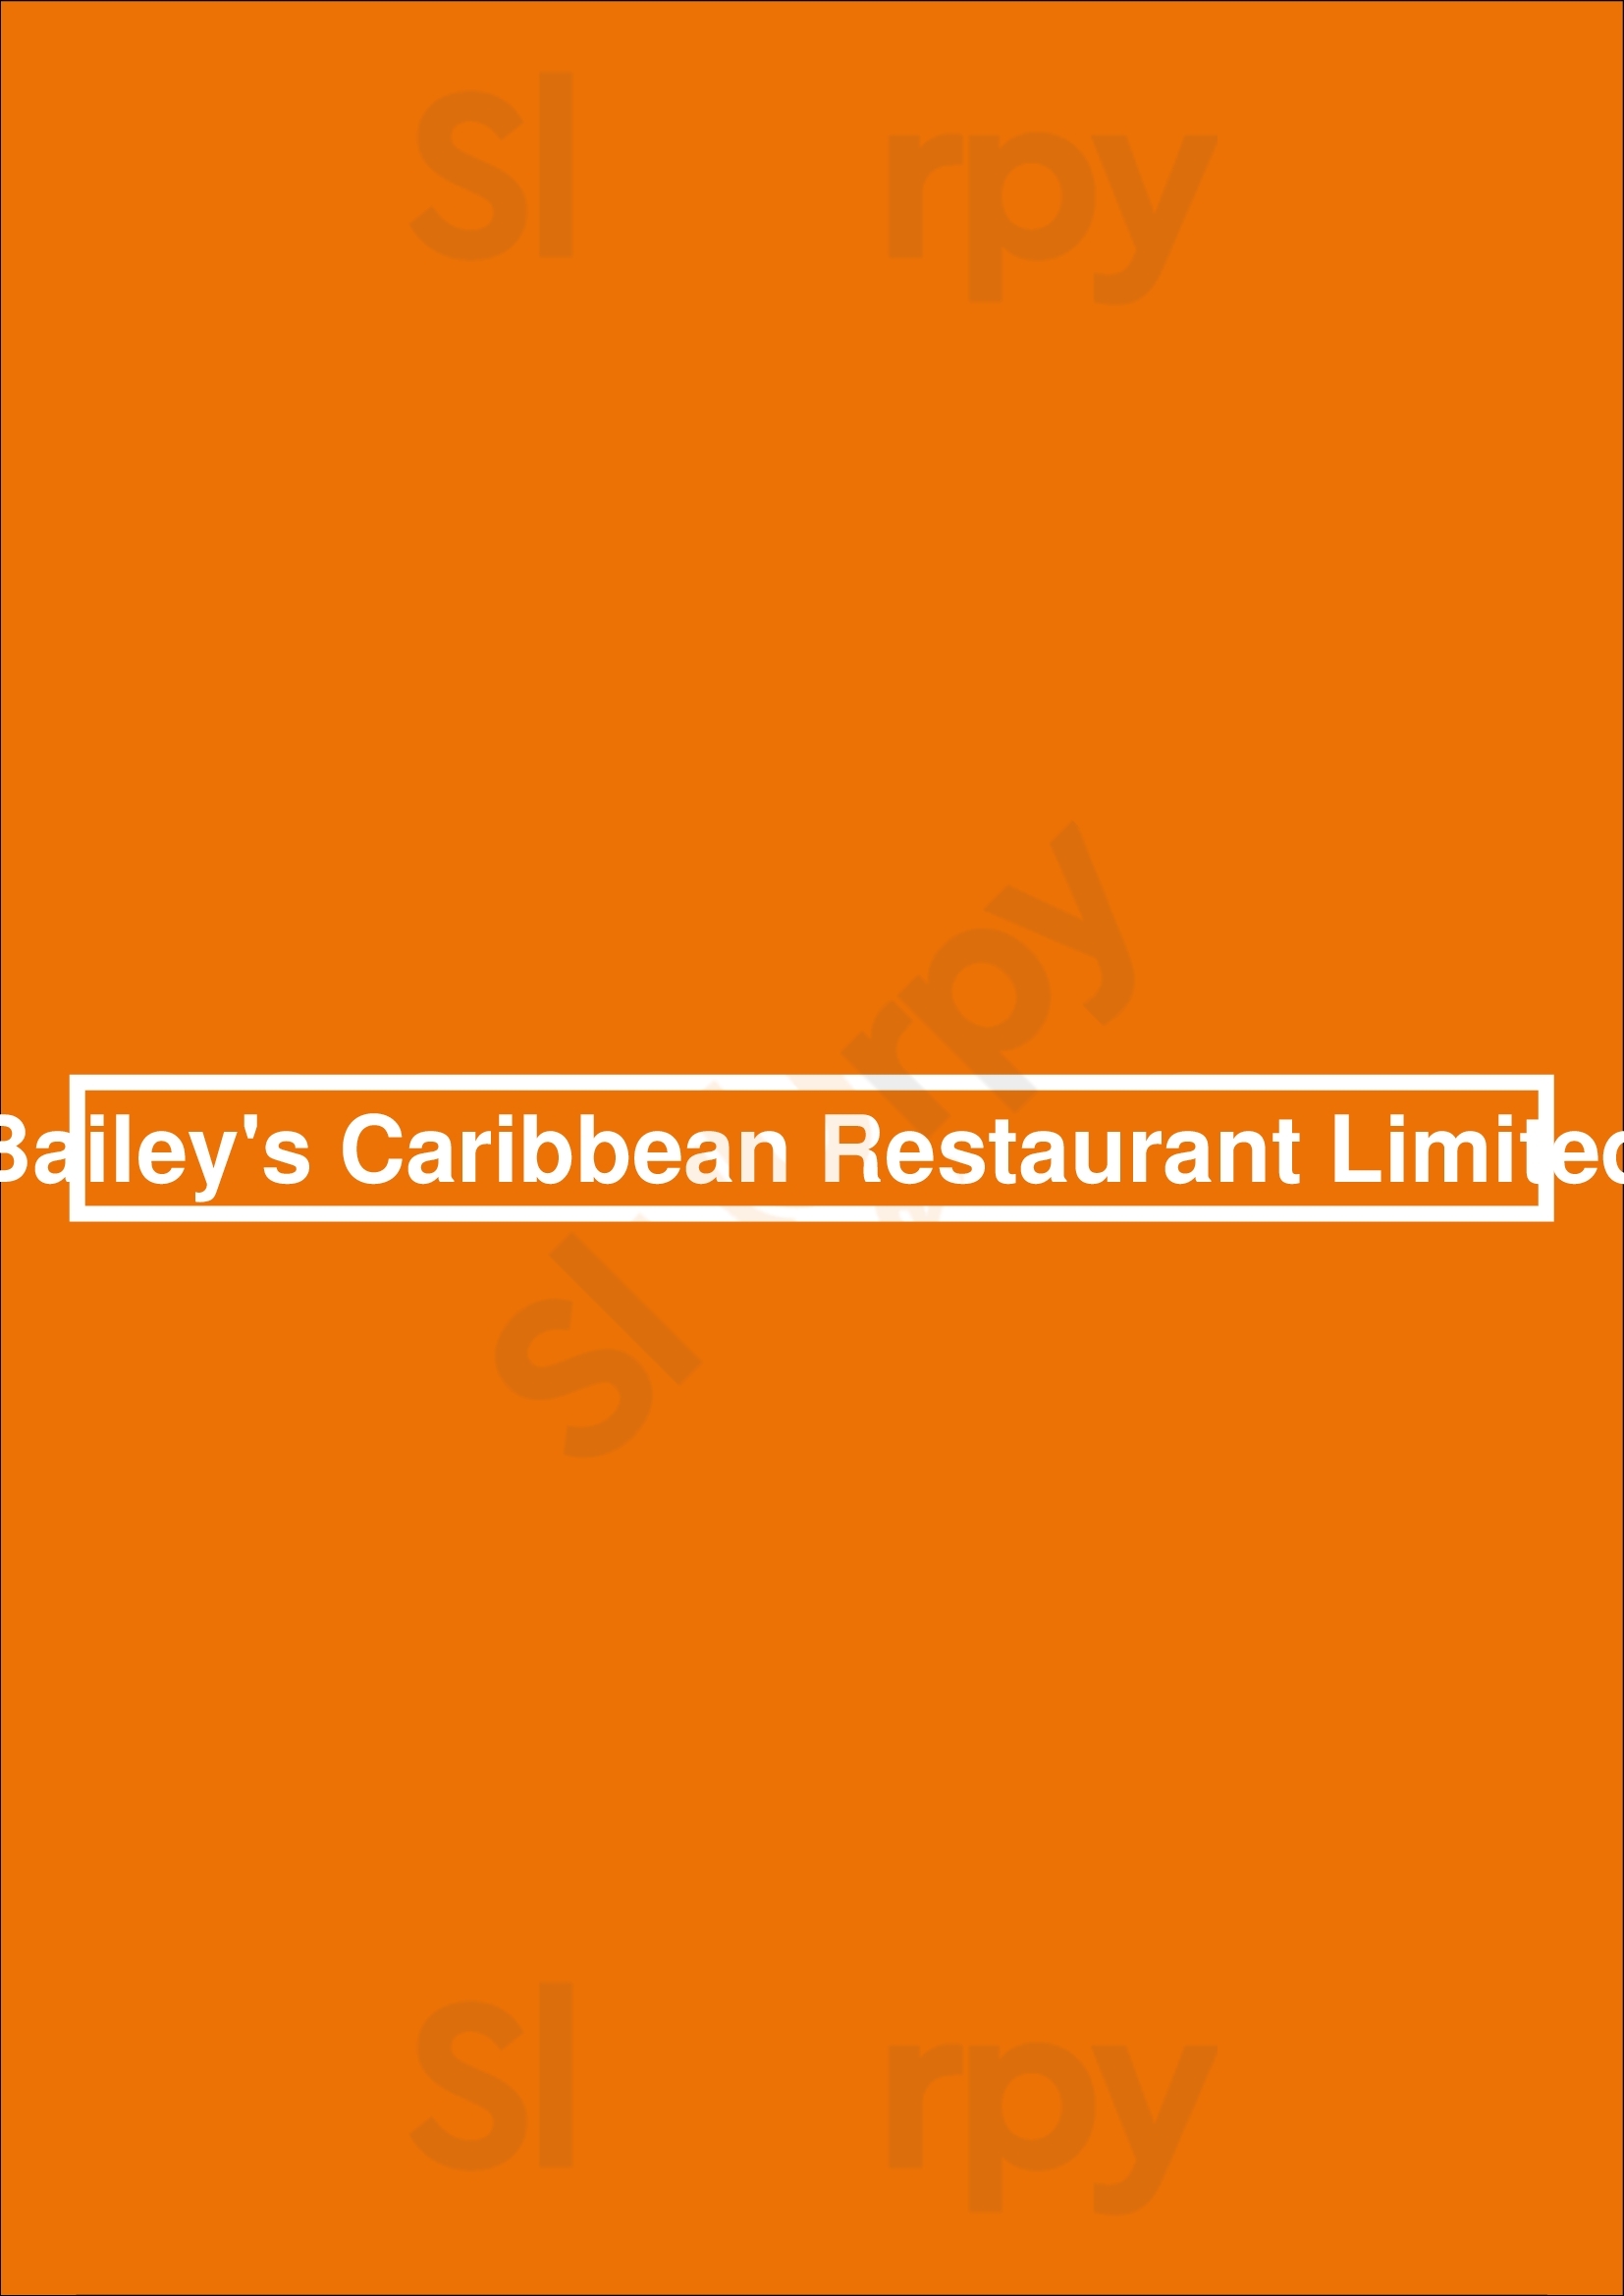 Bailey's Caribbean Restaurant Limited Birmingham Menu - 1